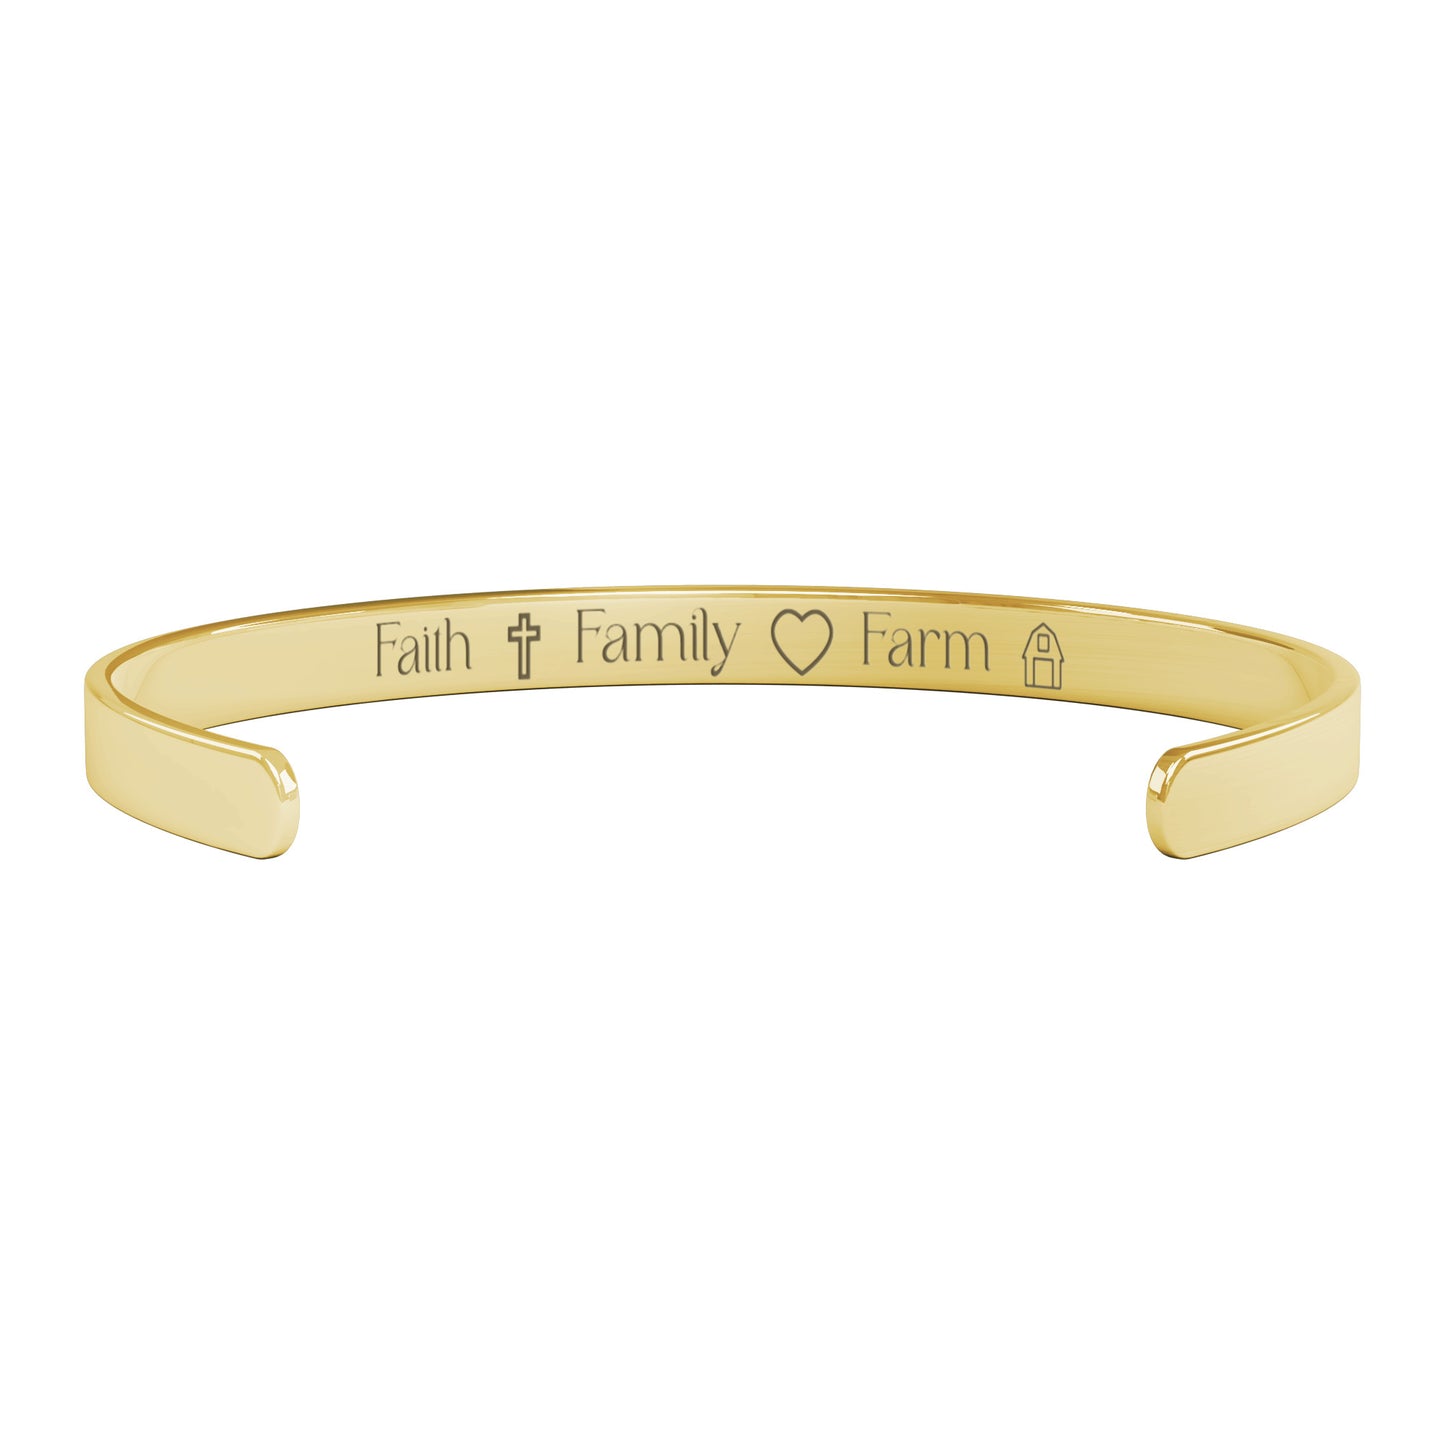 Faith Family Farm - Cuff Bracelet - FREE SHIPPING